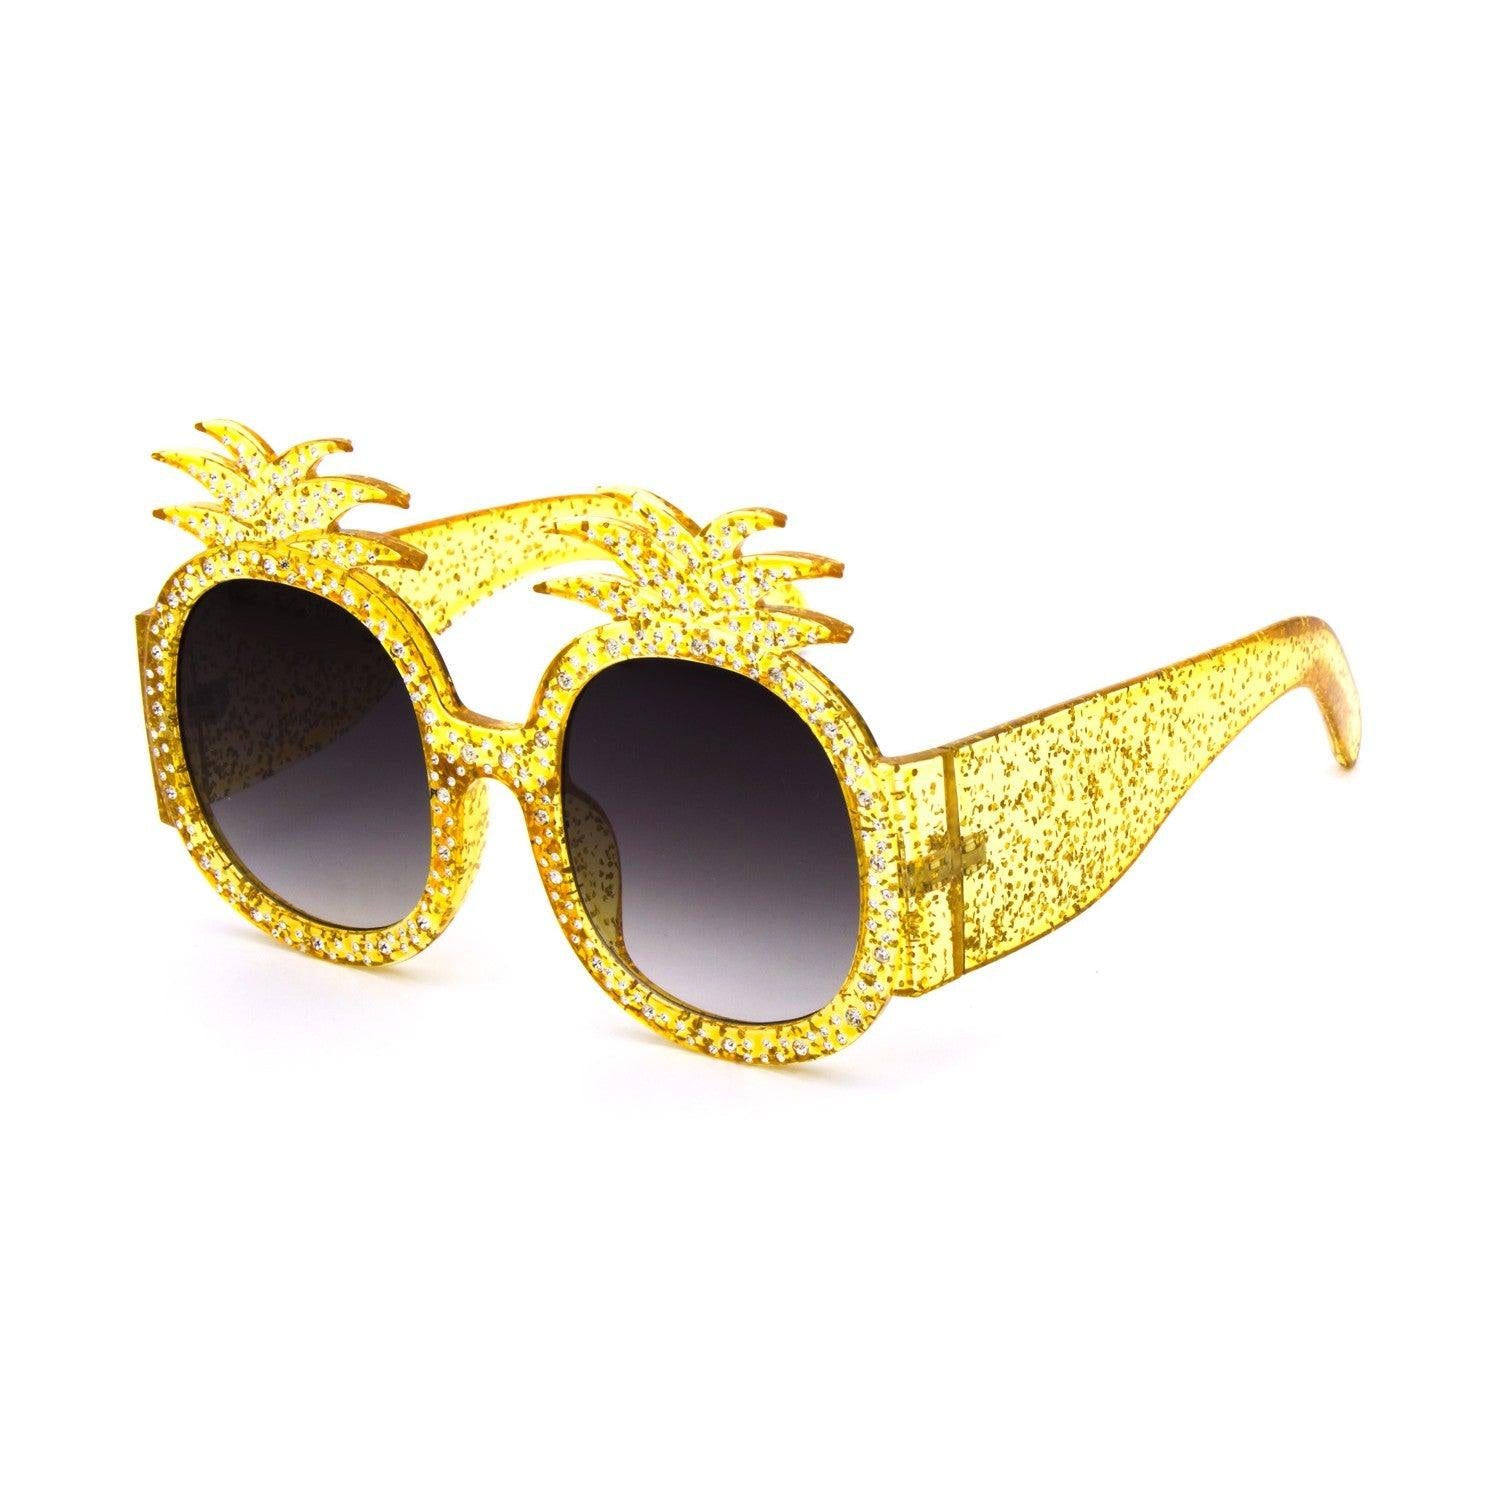 "Pineapple" Shape Sunglasses - Weekend Shade Sunglasses